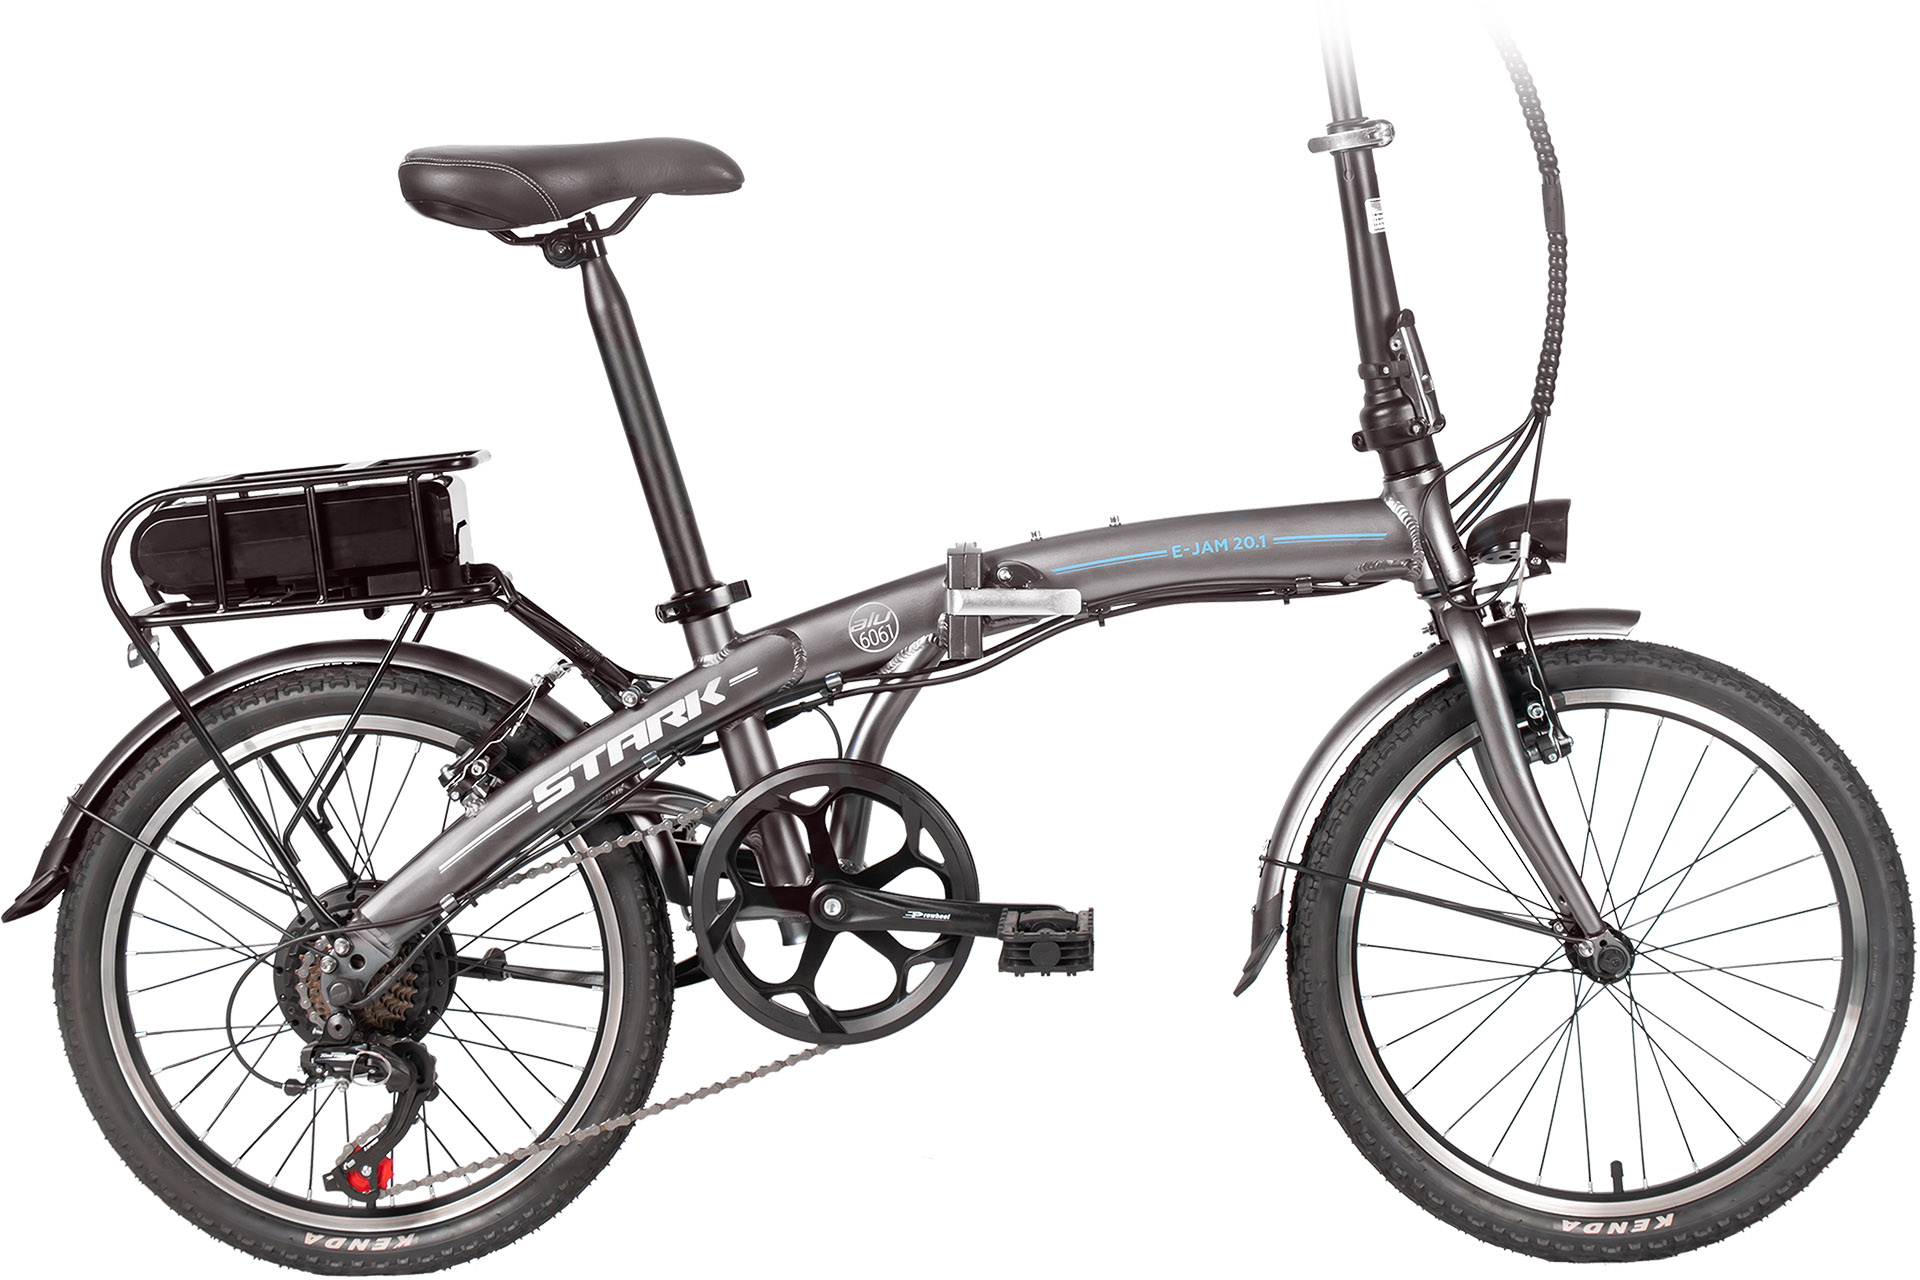  Отзывы о Электровелосипеде Stark E-Jam 20.1 V 2020